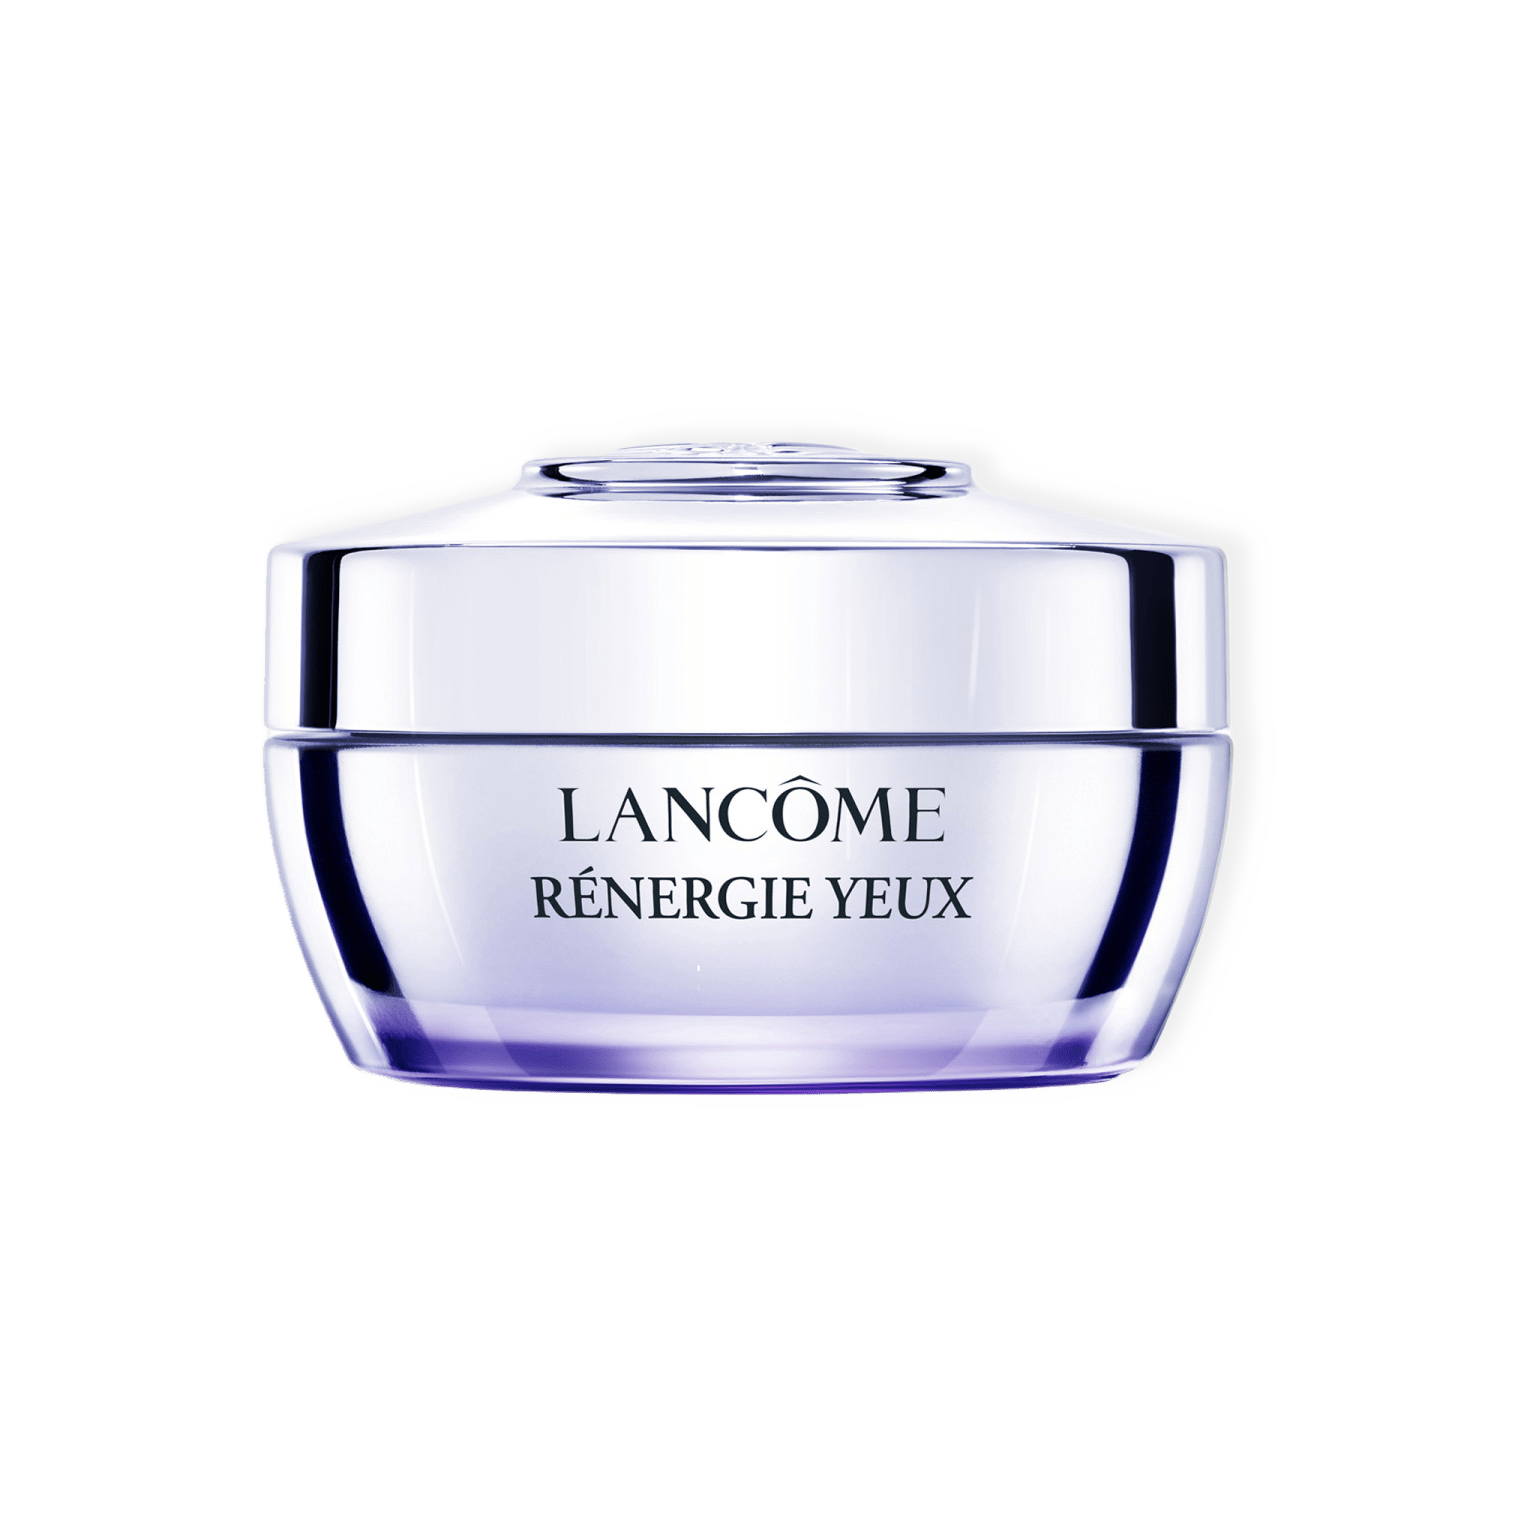 Rénergie Yeux Eye cream från Lancôme